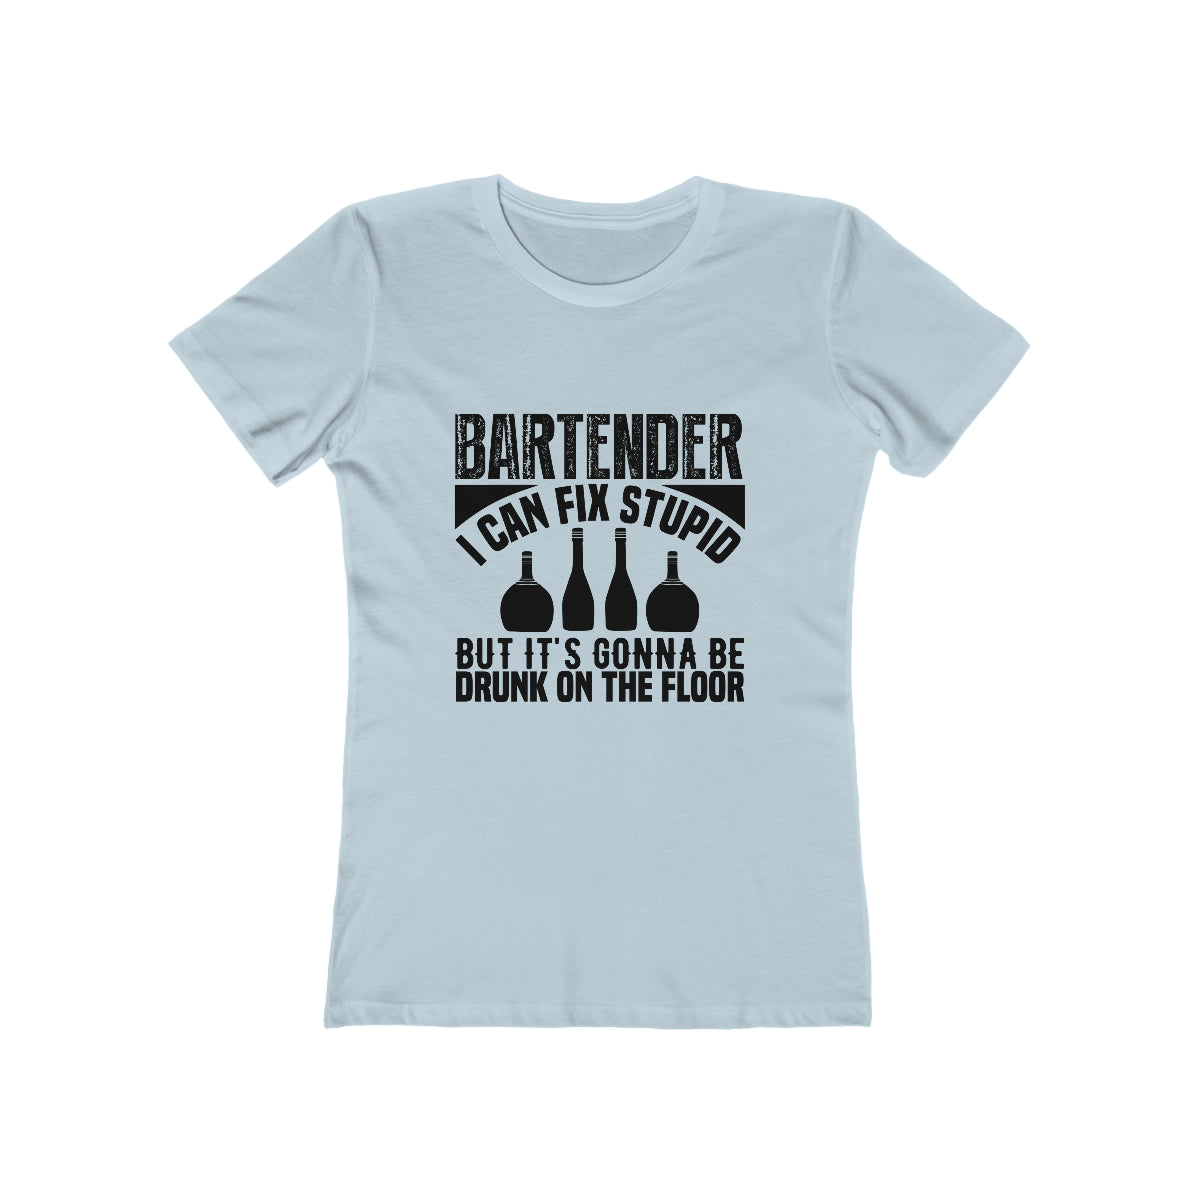 Bartender I Can Fix Stupid Bit Its Gonna Be Drunk of the Floor - Women's T-shirt